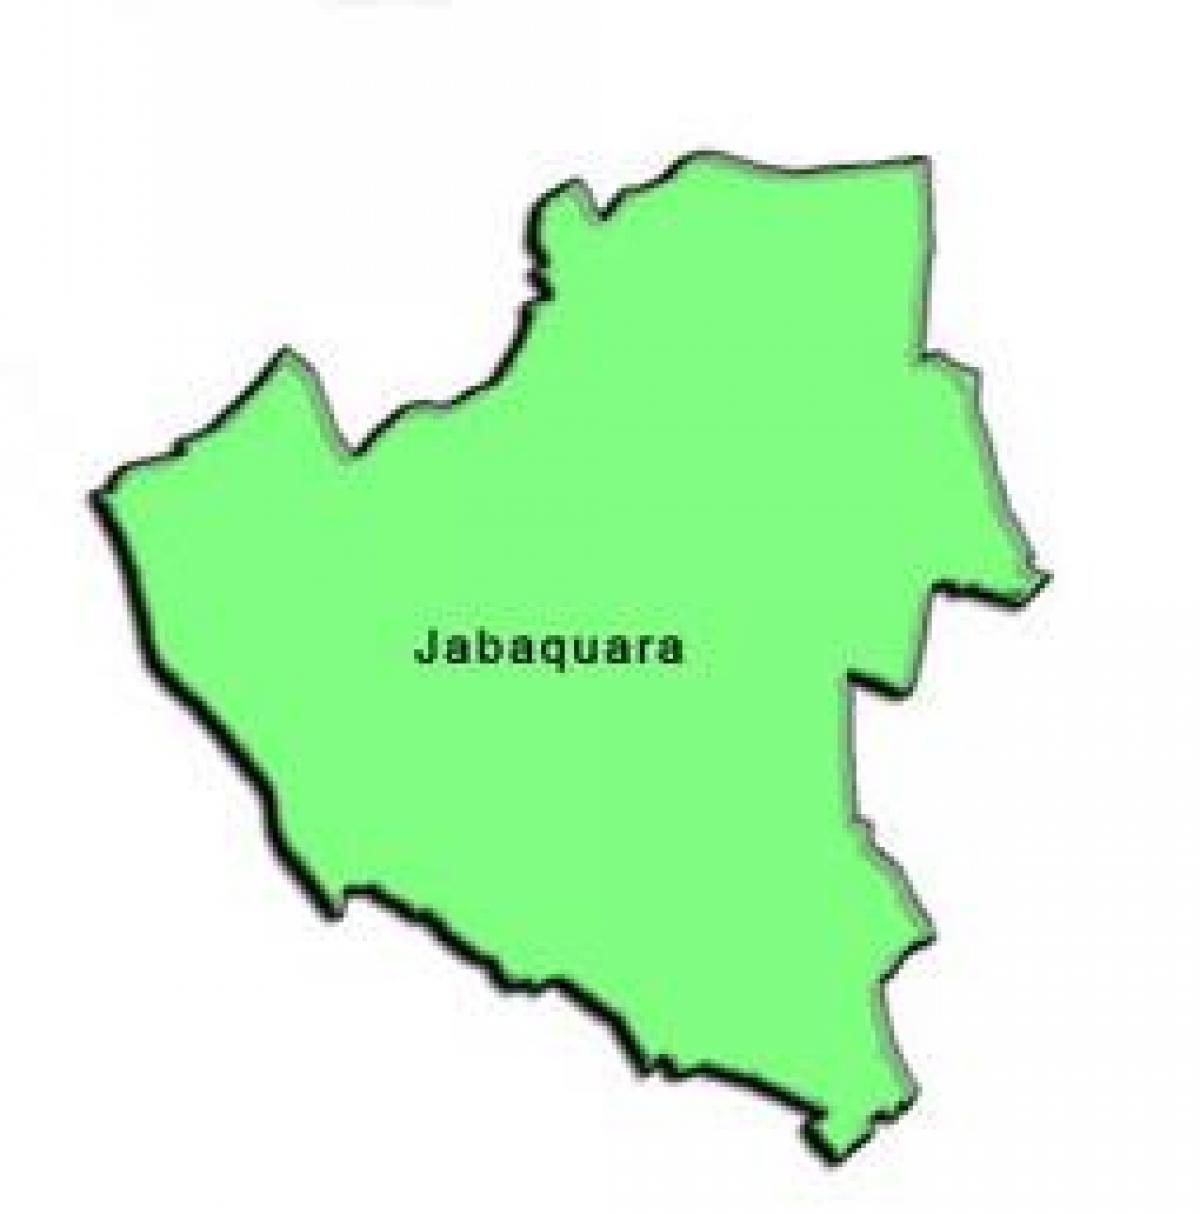 Peta dari Jabaquara sub-prefektur